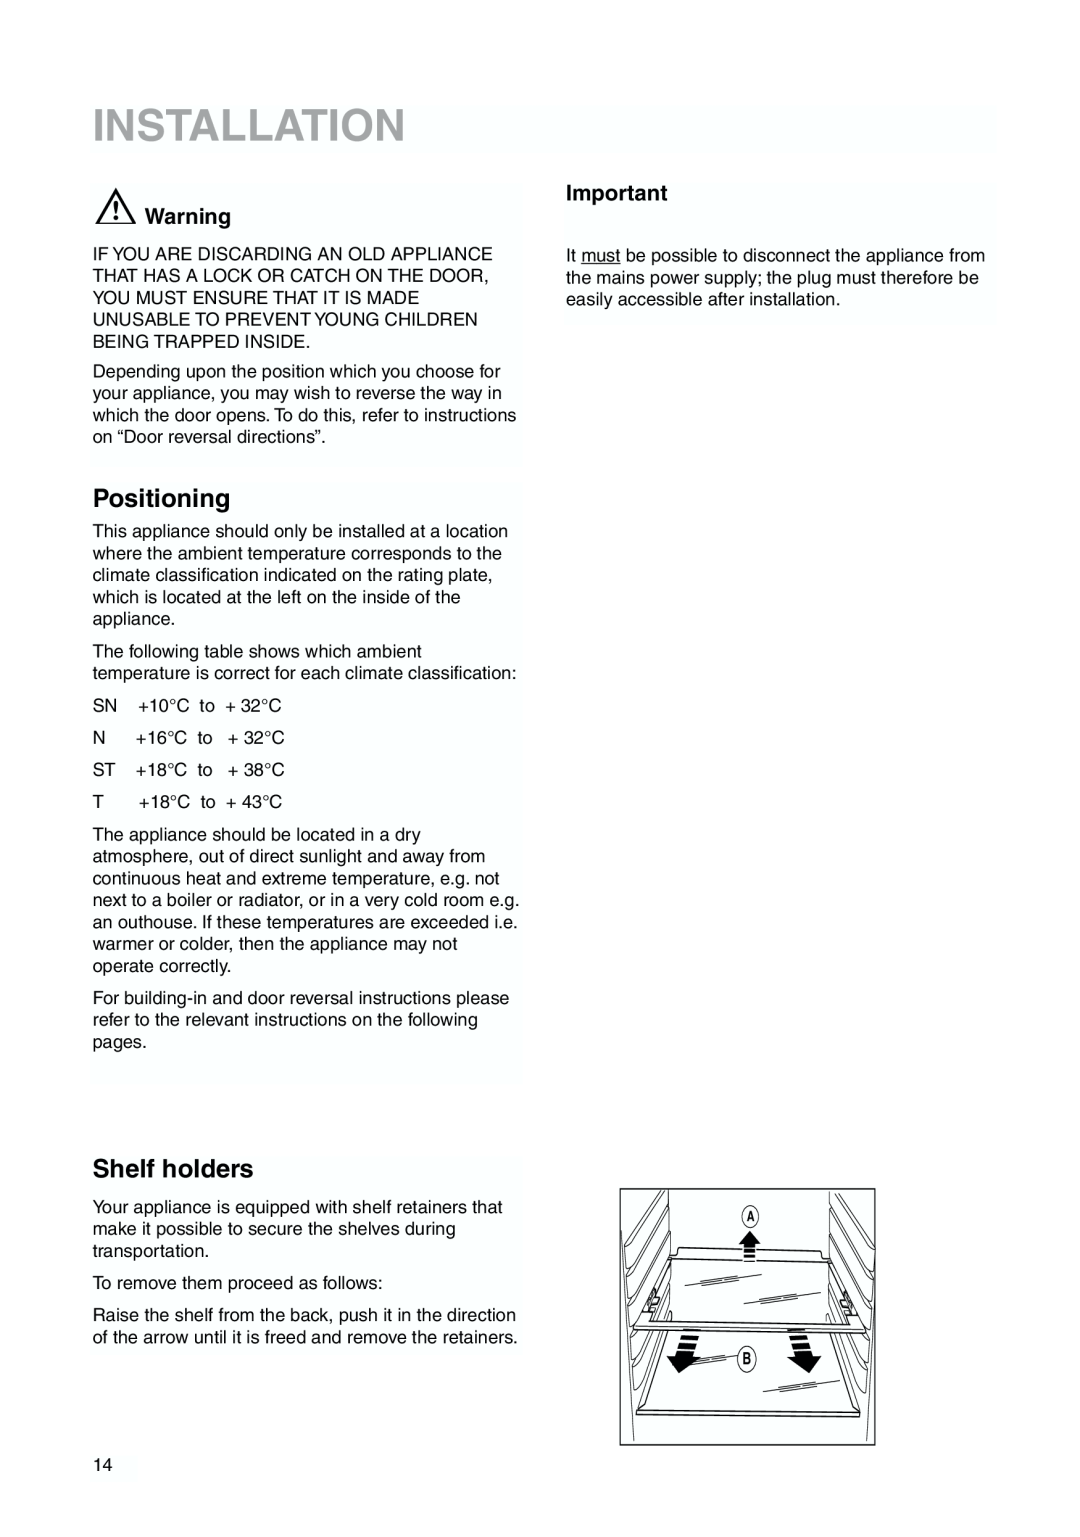 Zanussi ZBB6286 manual Installation, Positioning, Shelf holders 